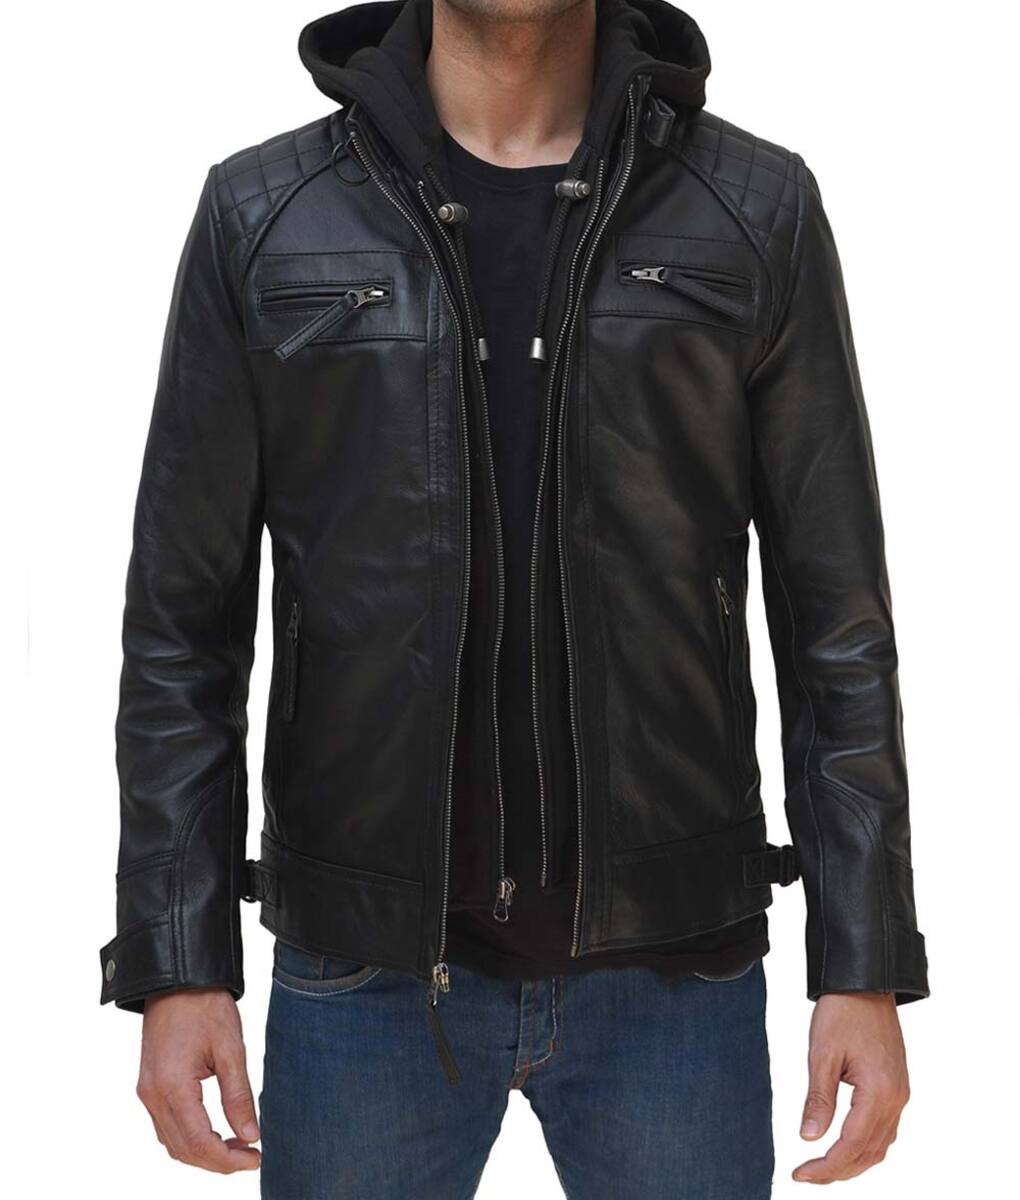 Mens_Black_hooded_leather_jacket